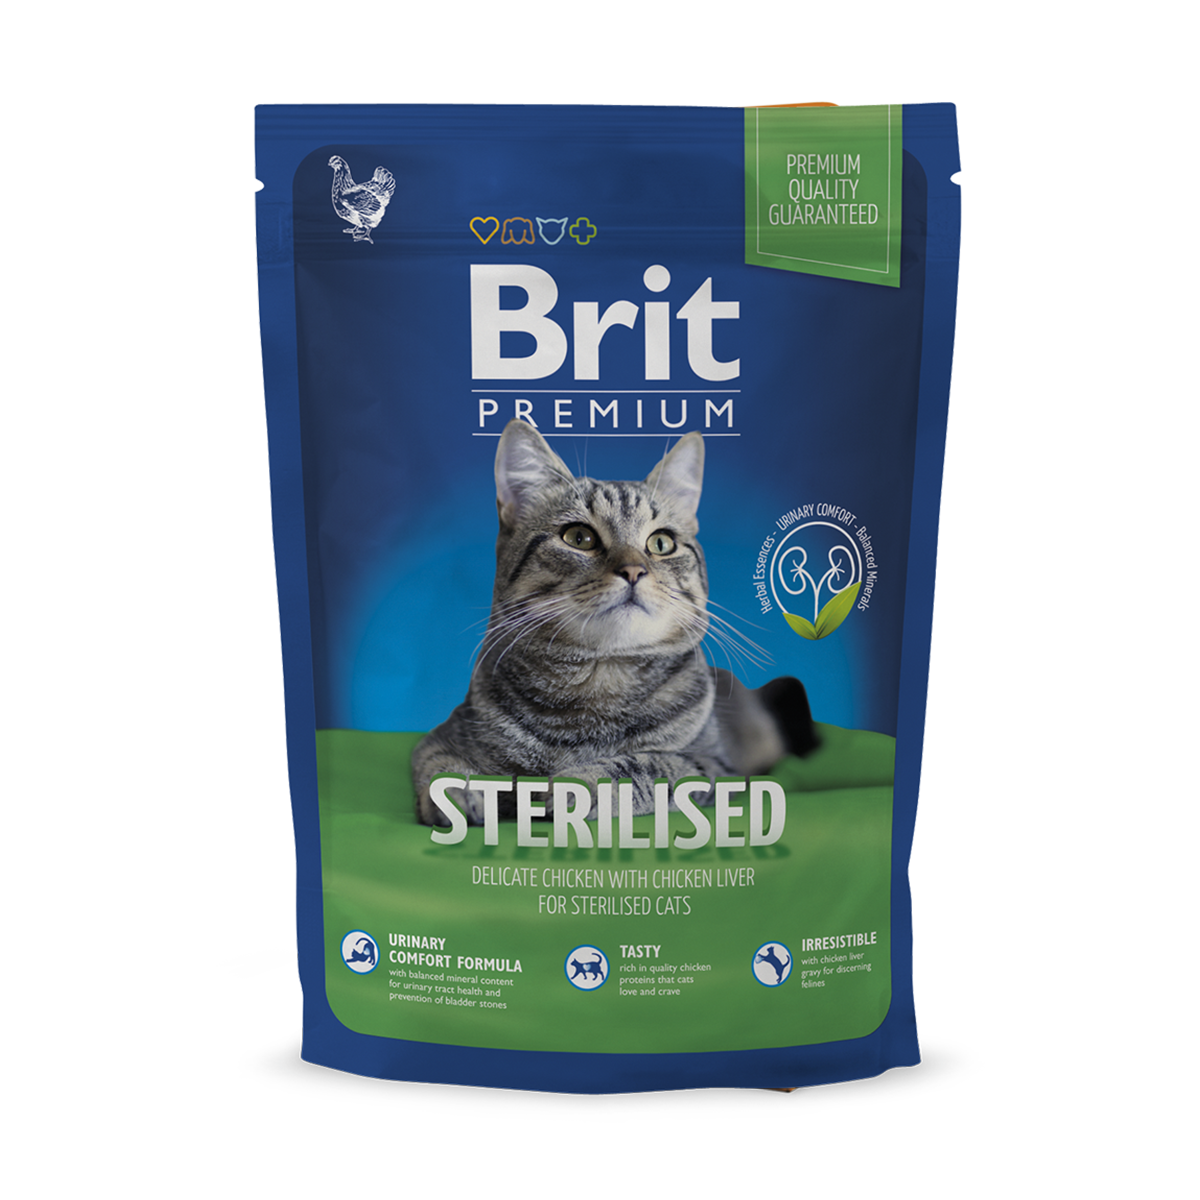 Корм для котов Brit Premium Cat Sterilized, 1,5 кг